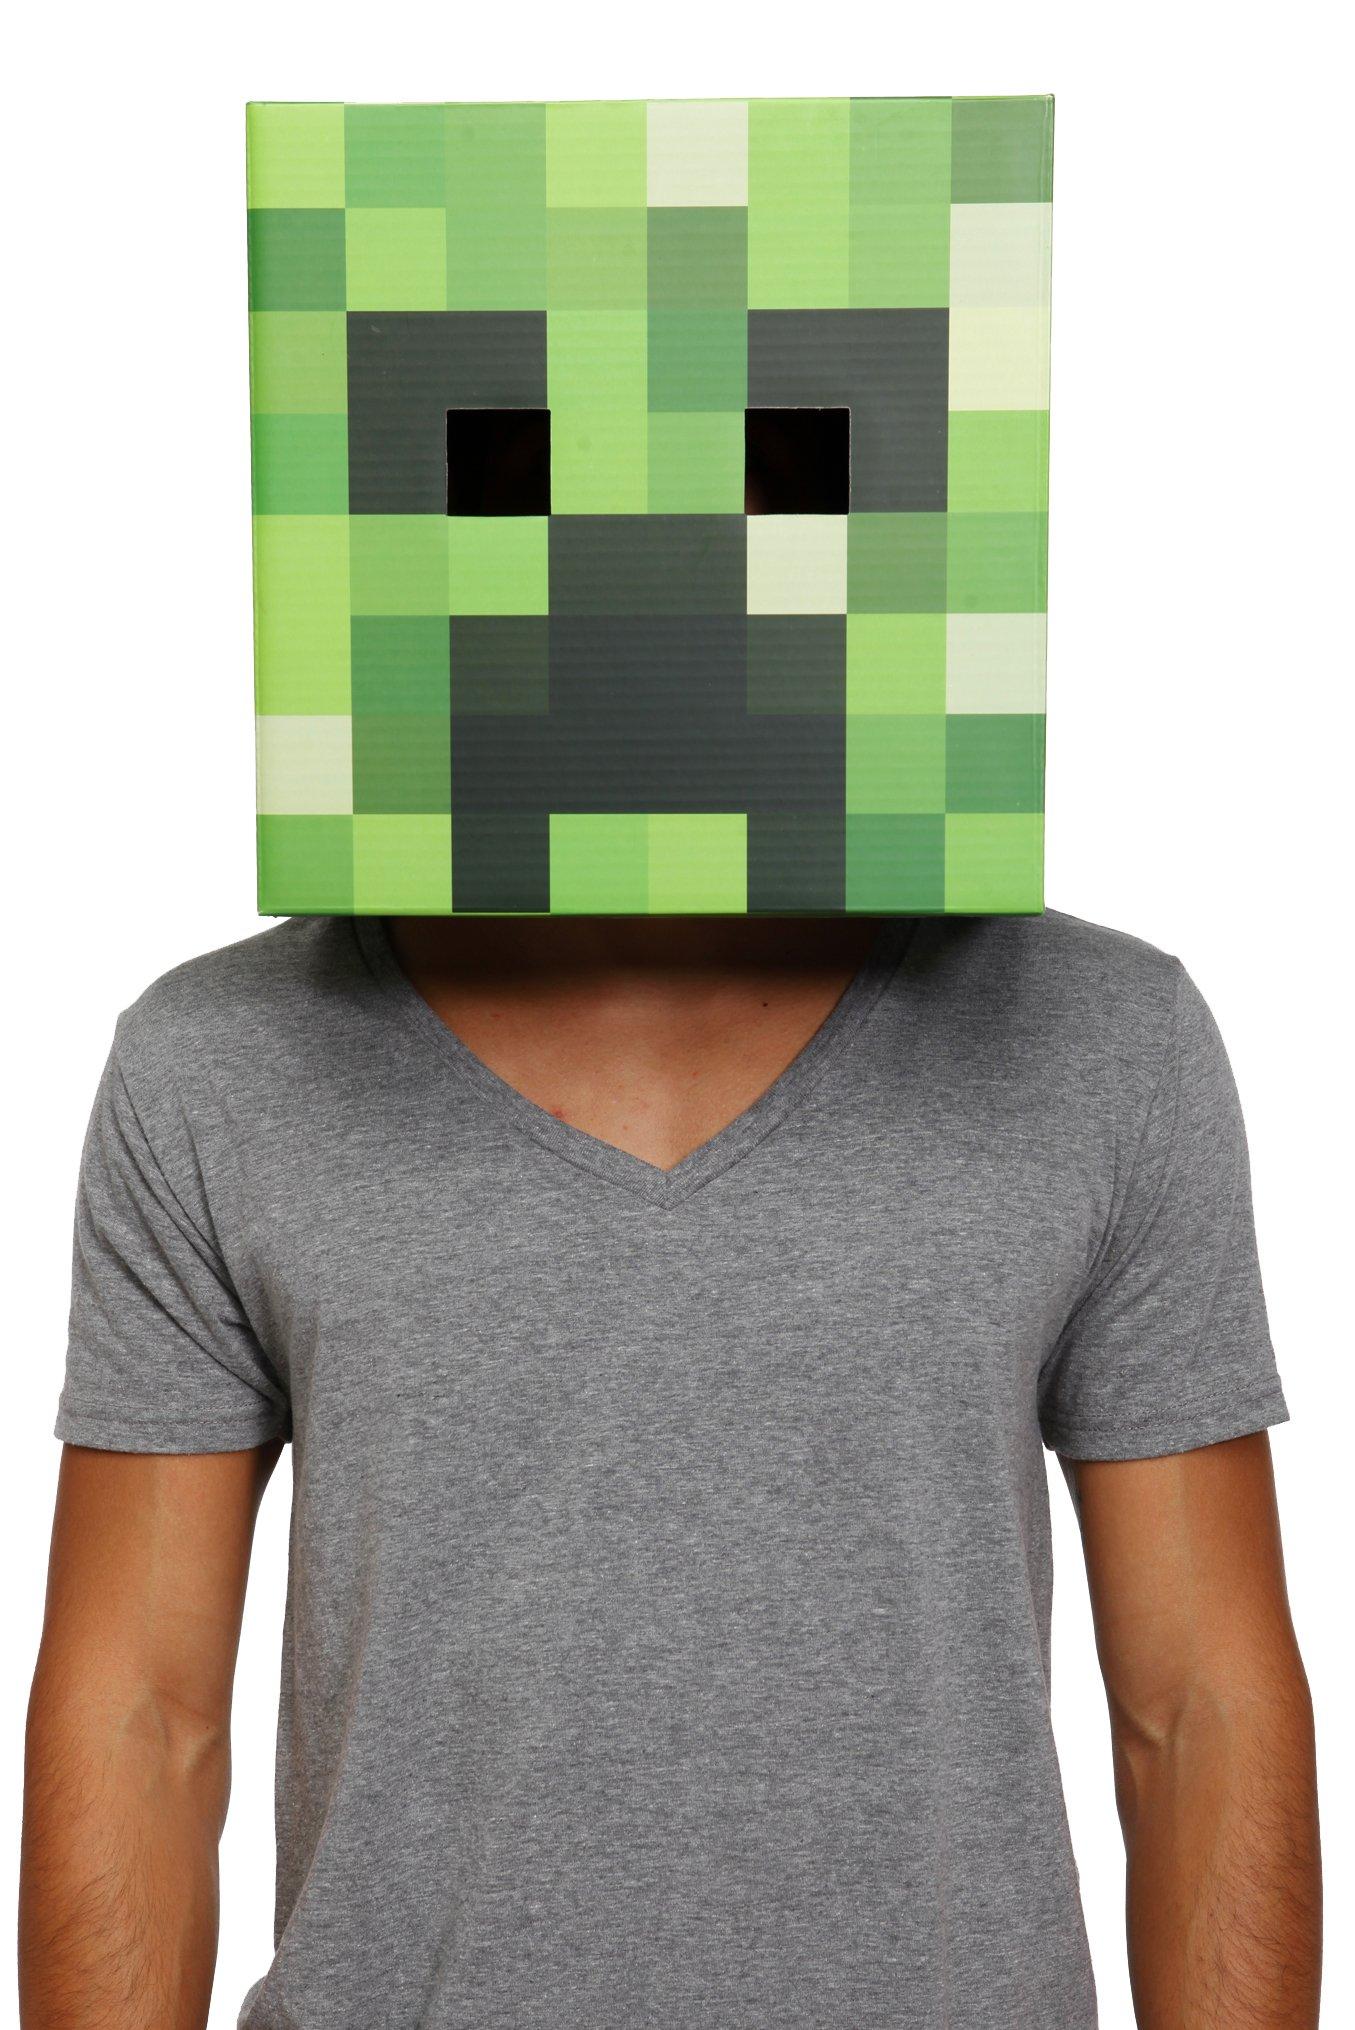 Minecraft Cardboard Creeper Head, , hi-res